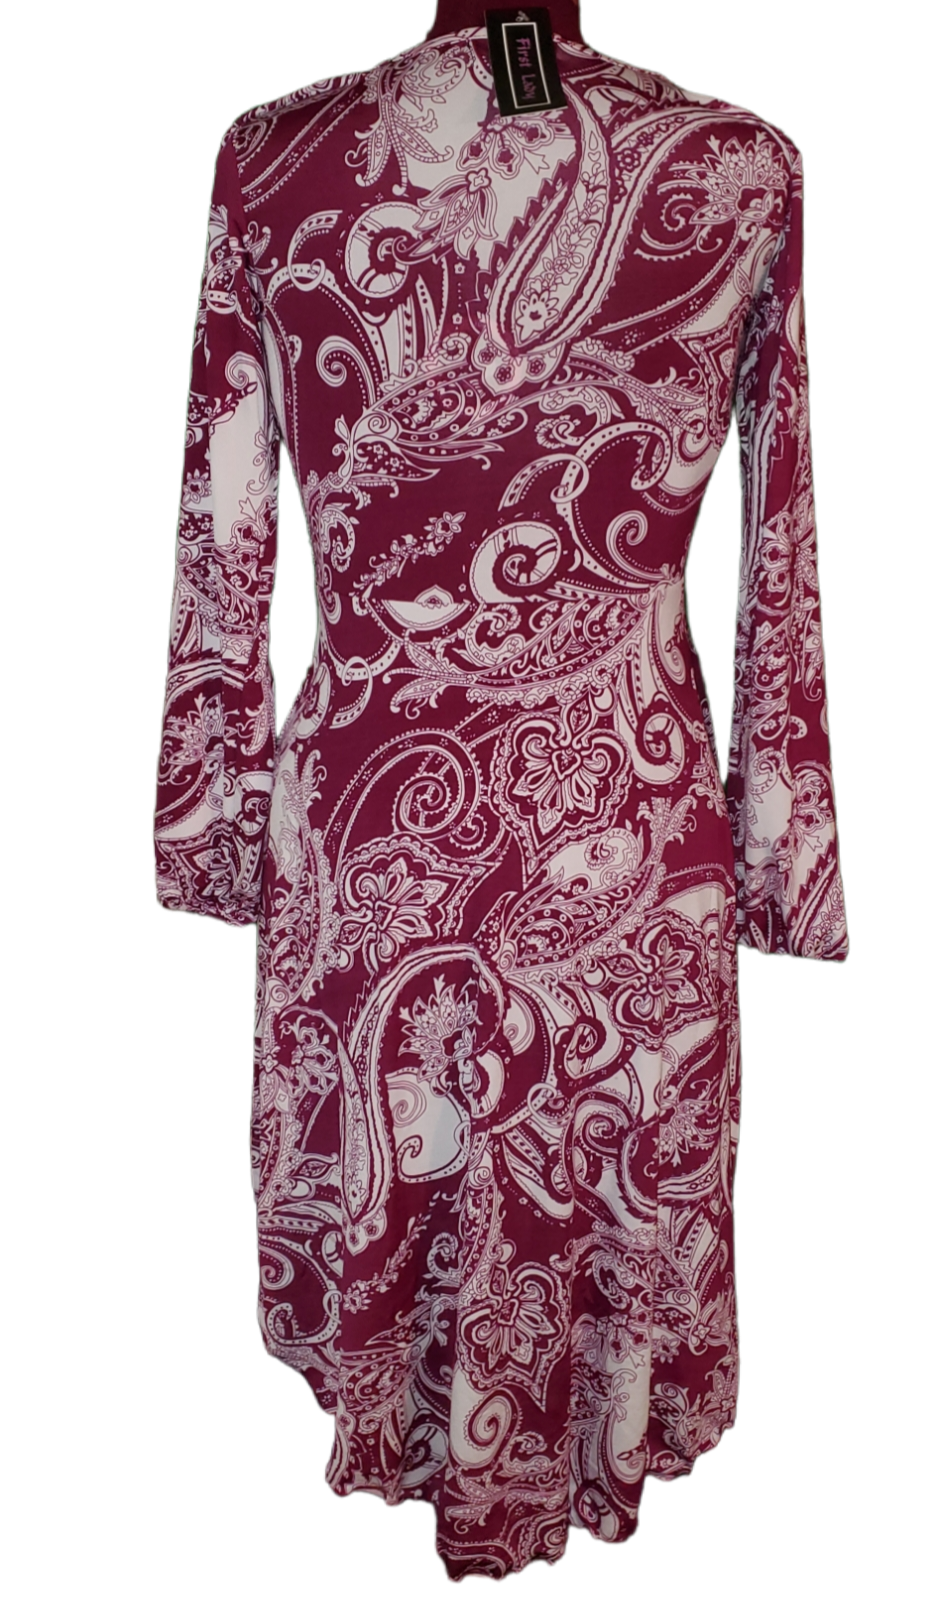 First Lady Purple Paisley Print Dress